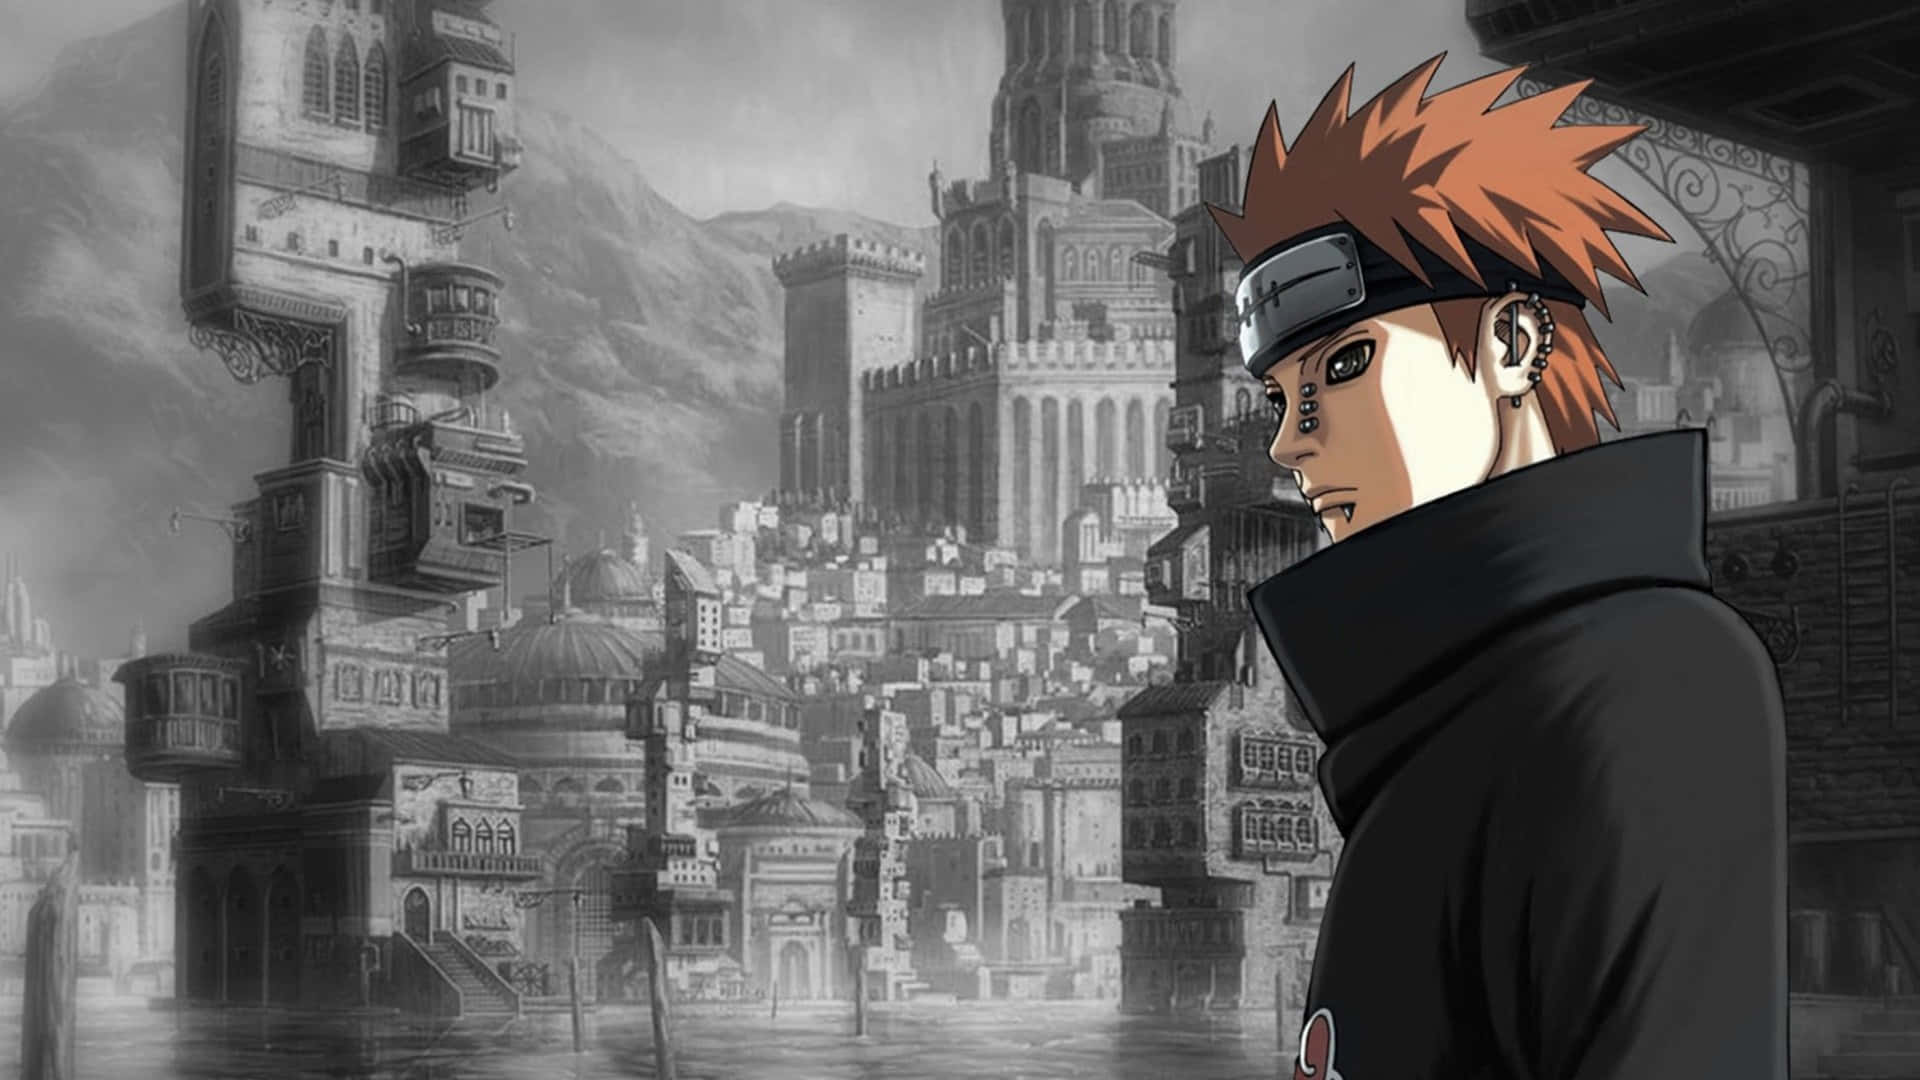 Pain's deadly techniques wrecks havoc in Naruto 4K Wallpaper